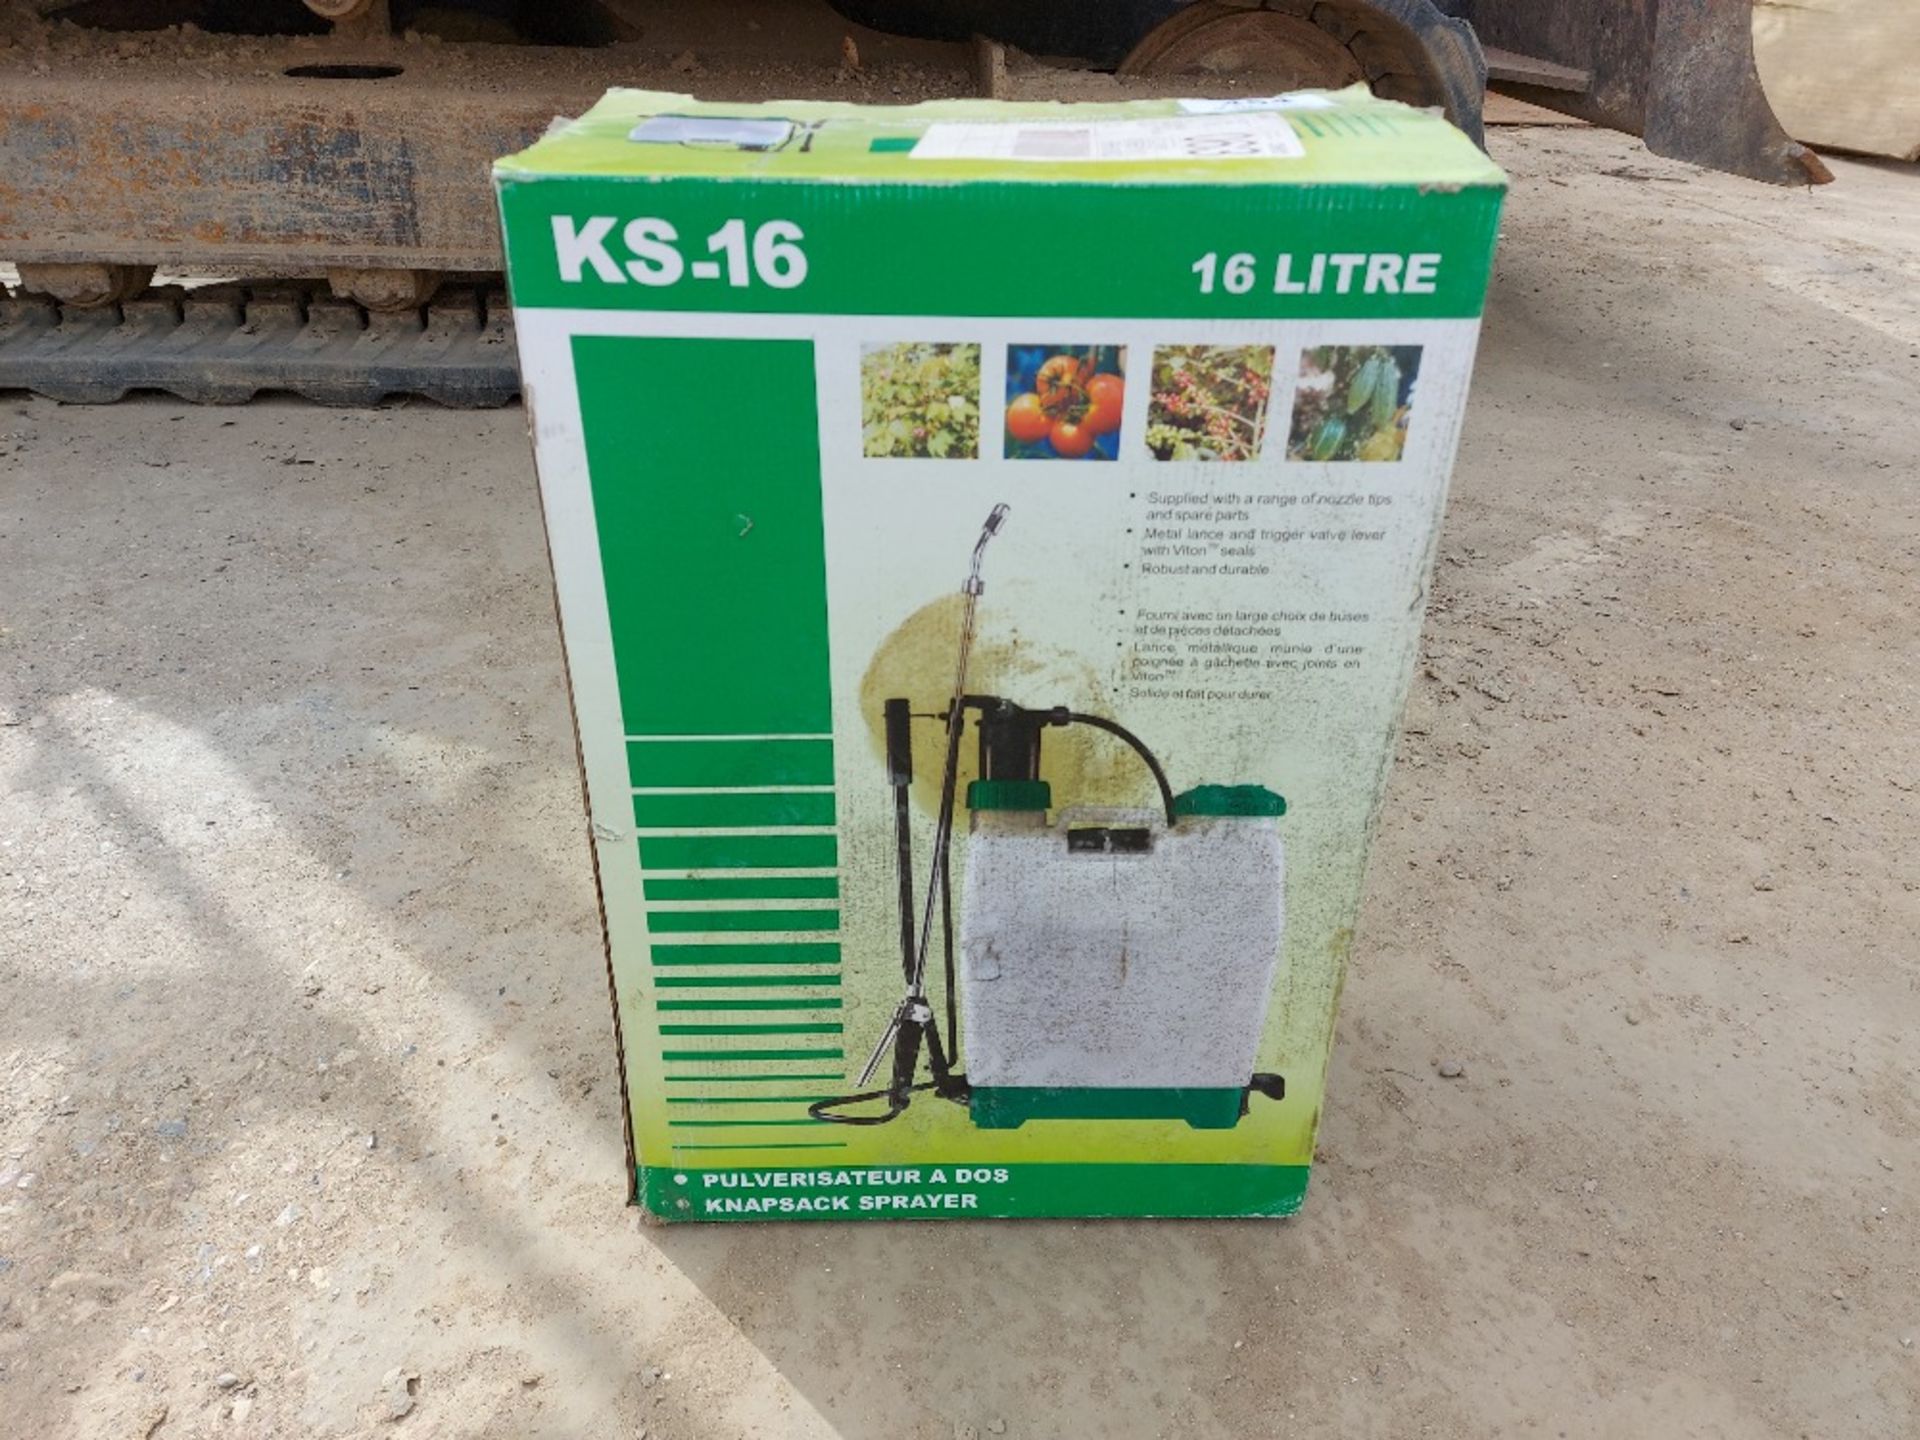 New KS-16 Knapsack Sprayer (Pesticide Sprayer) 16Ltr